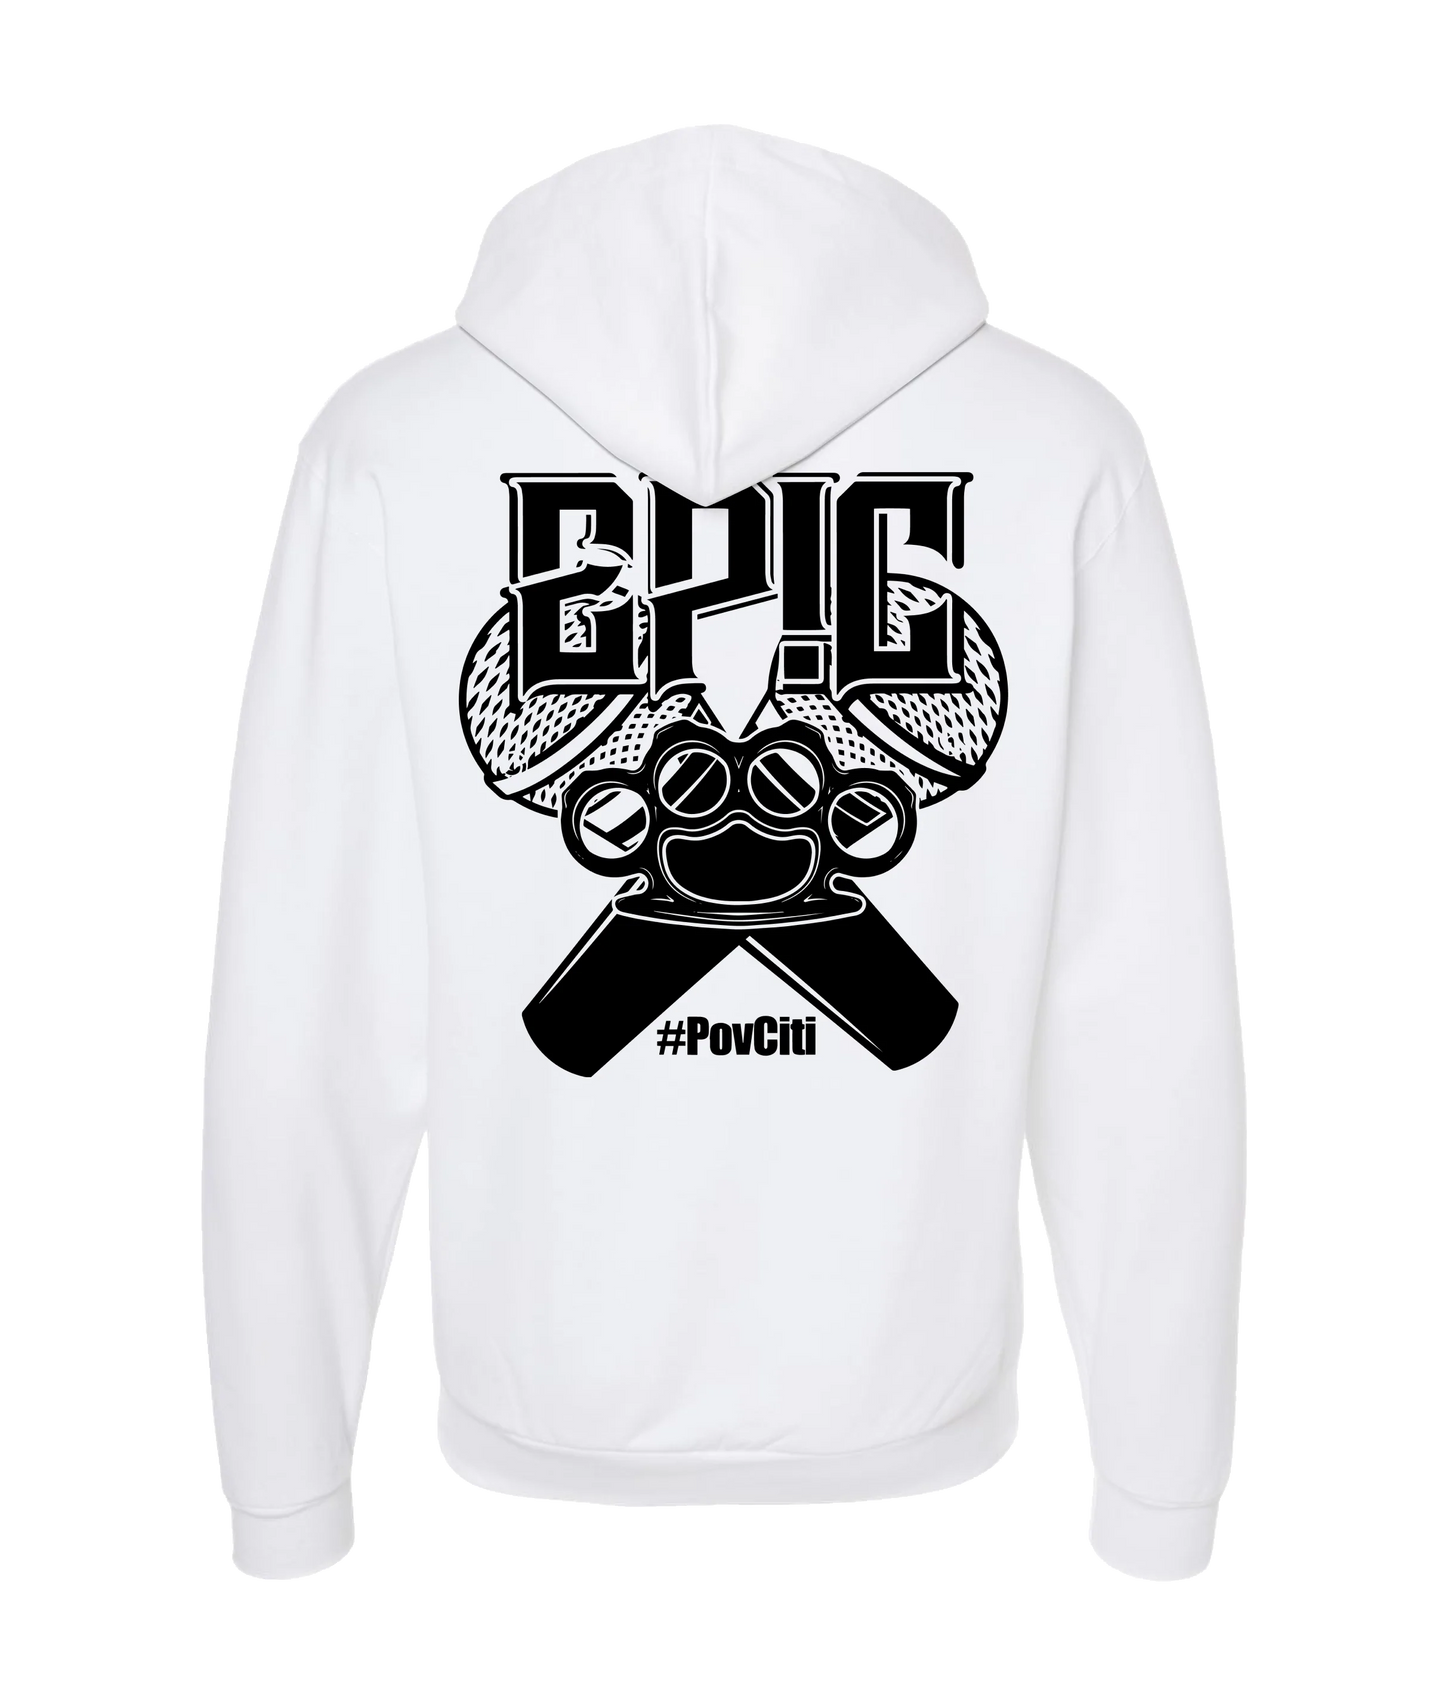 Ep!c of PovCiti - Epic #PovCiti - White Zip Up Hoodie